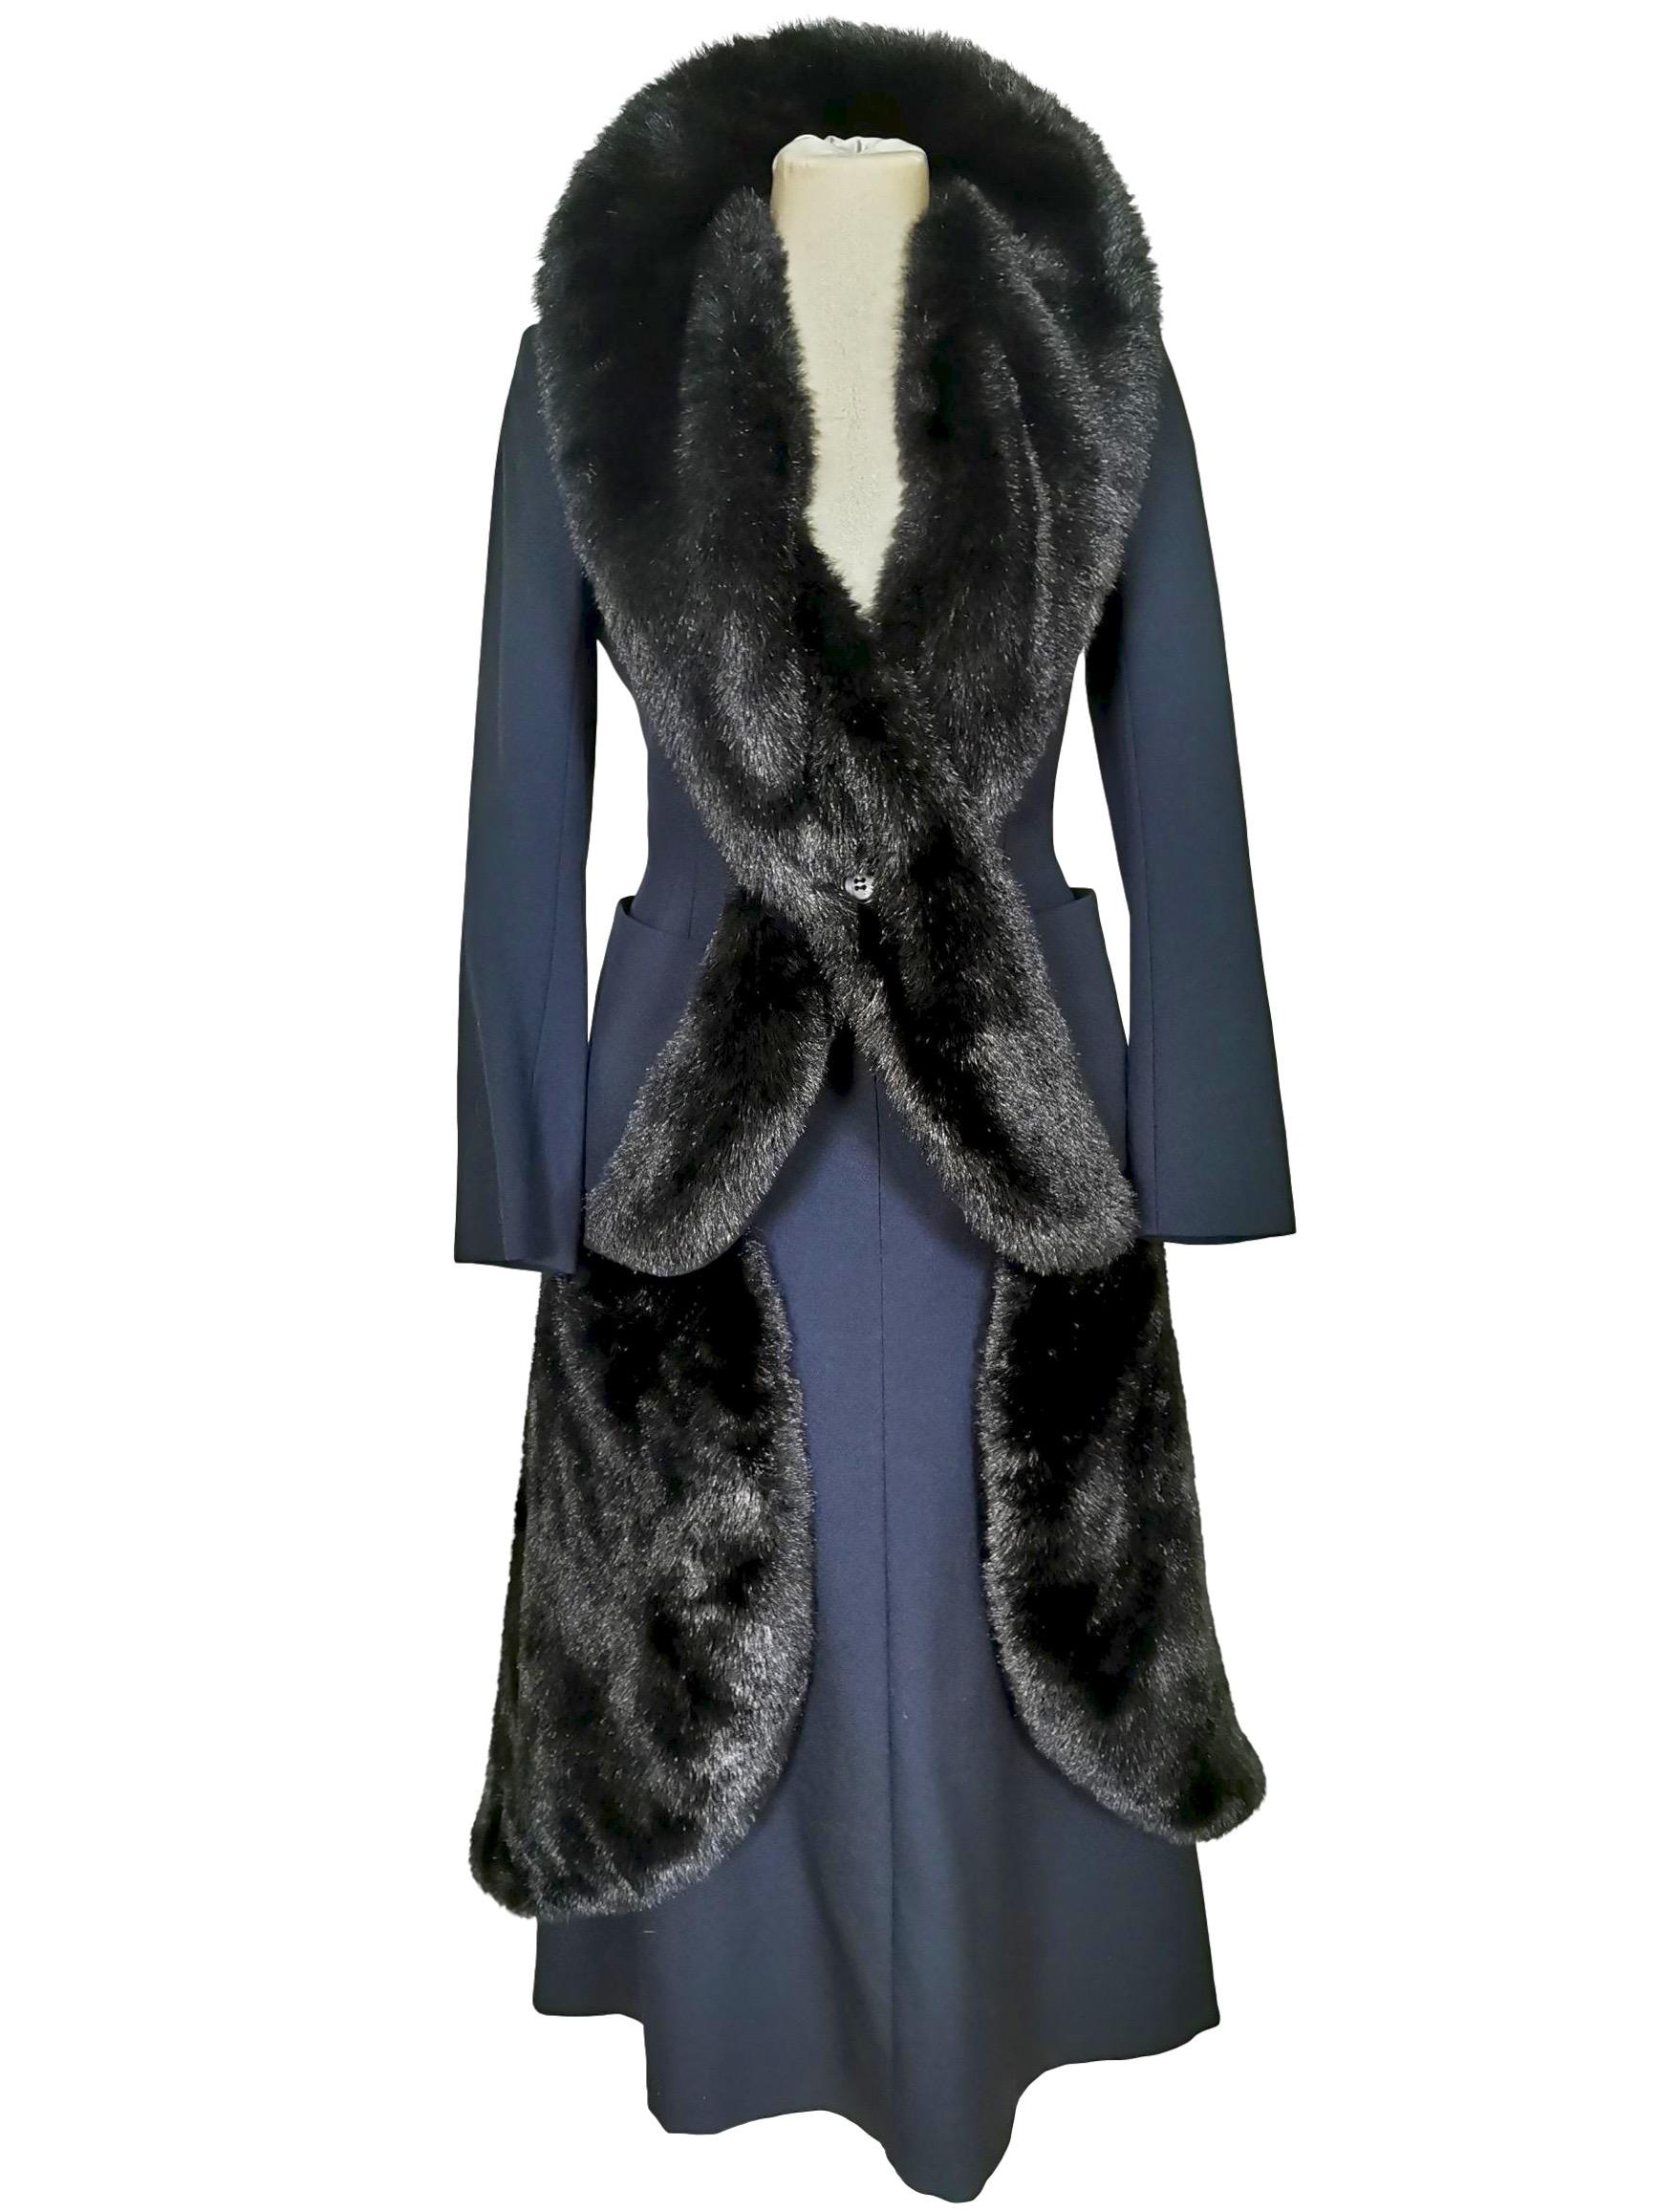 Black CDG Junya Watanabe 50s Inspired Skirt Suit Detachable Faux Fur Collar For Sale